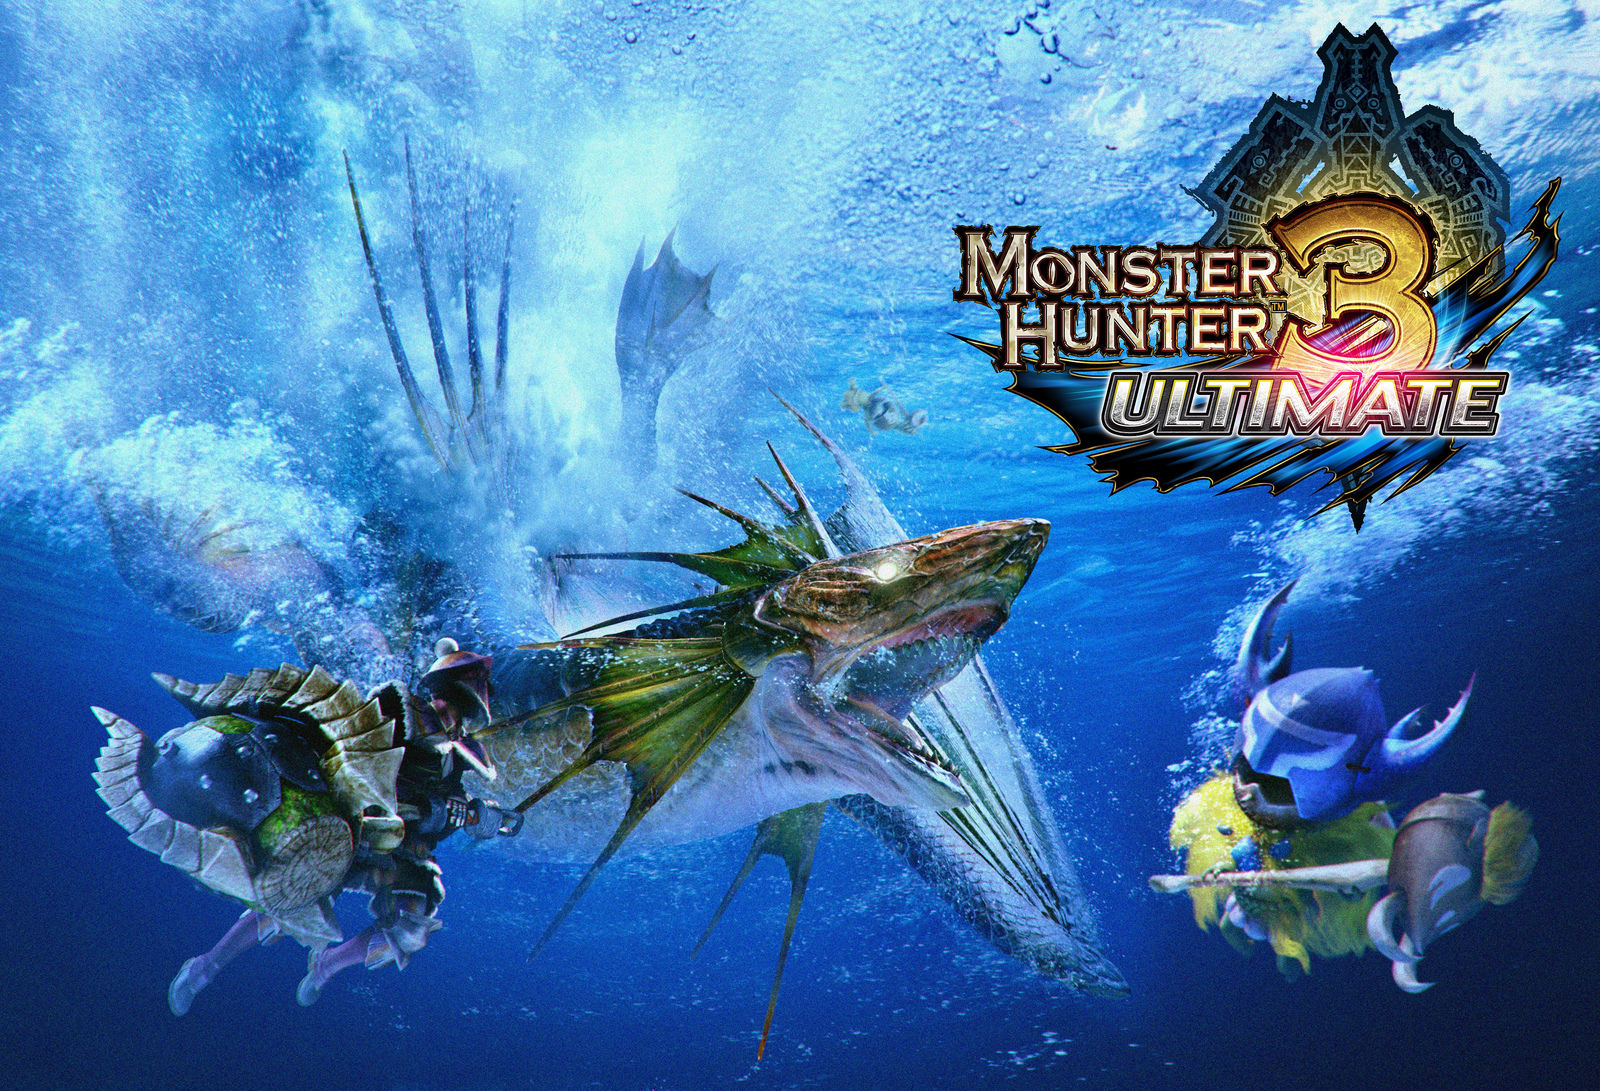 Monster Hunter 3 Ultimate On Wii U Receives Update - My Nintendo News